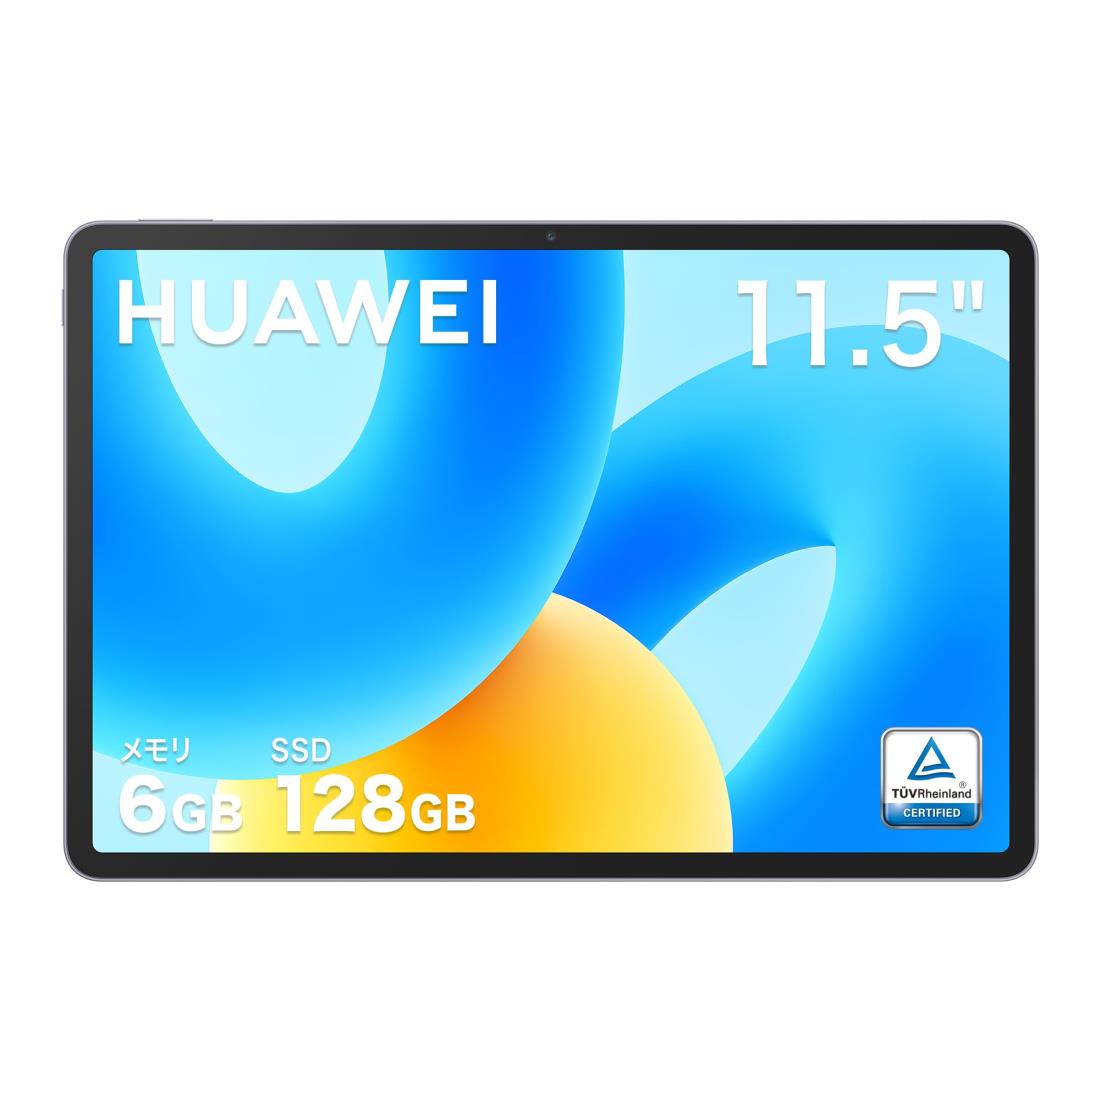 HUAWEI タブレット HUAWEI MatePad 11.5" タブレット 6GB/128GB 120Hz ファーウェイフルビューディスプレイ 一体型メタリックボディ 着脱式マグネットキーボード 4nm高性能プロセッサー